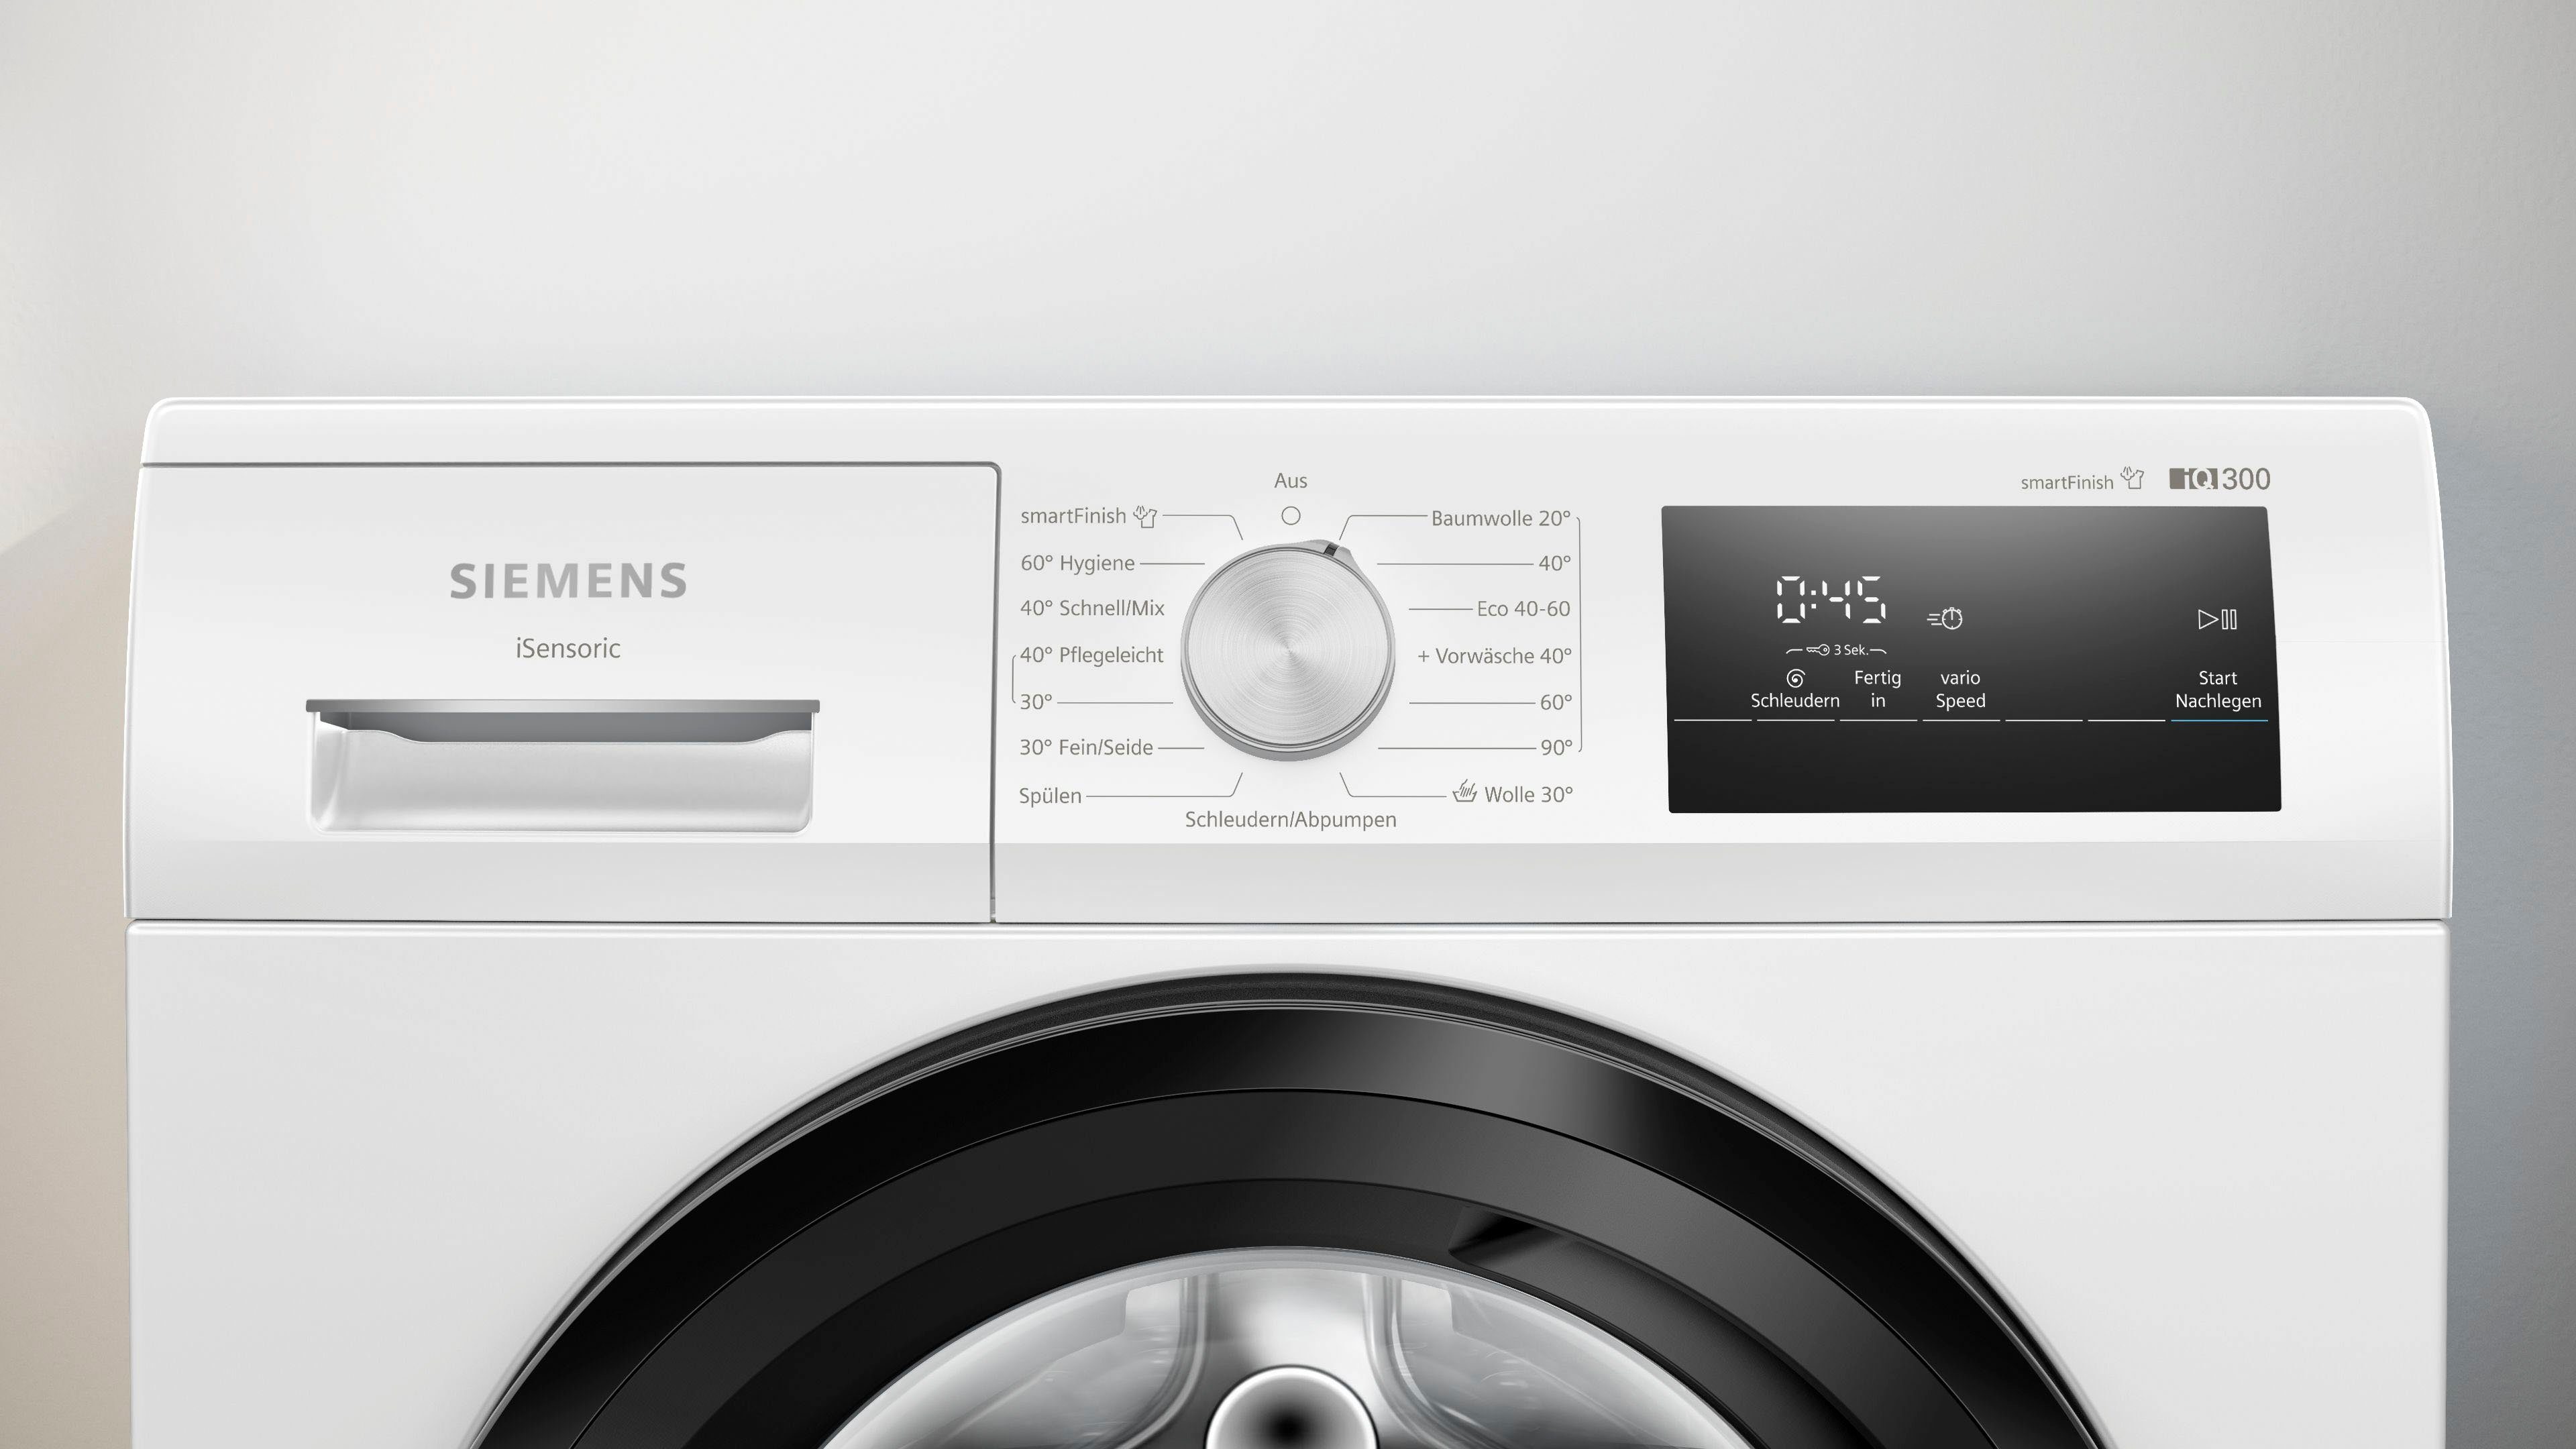 SIEMENS Waschmaschine 1400 WM14N001, 8 kg, U/min iQ300